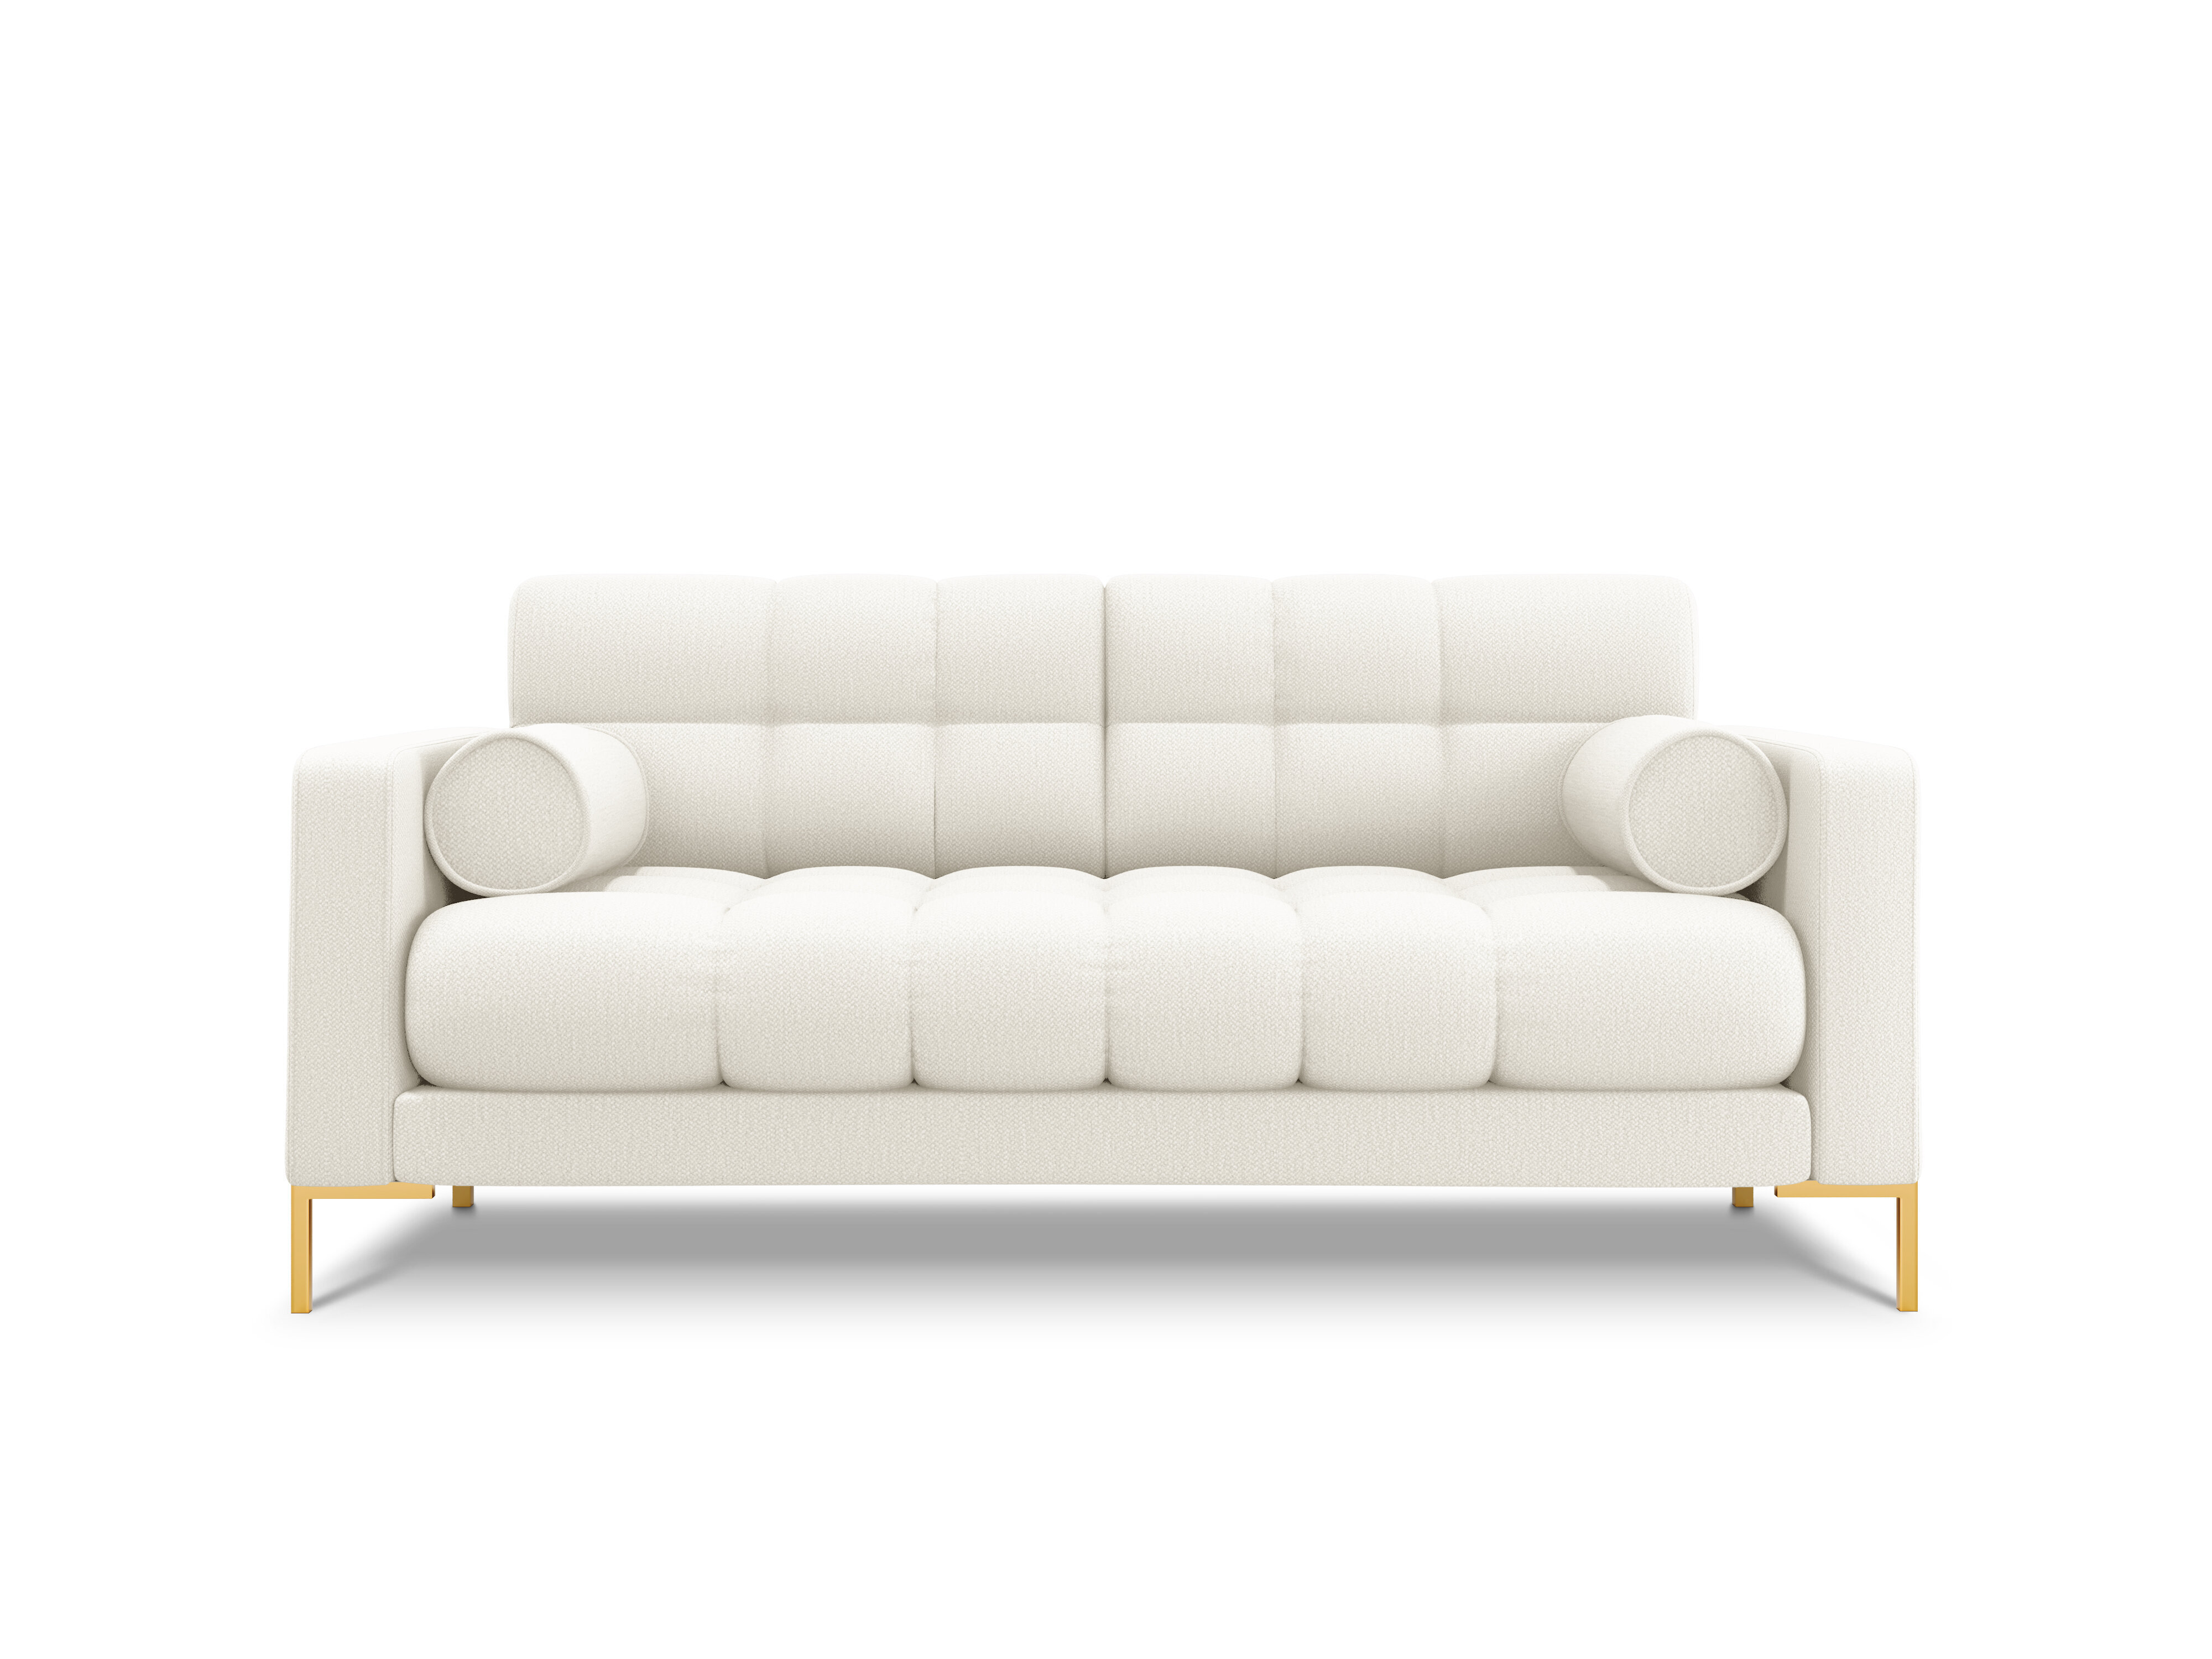 Kahdenistuttava sohva Cosmopolitan Design Siena, musta. hinta 